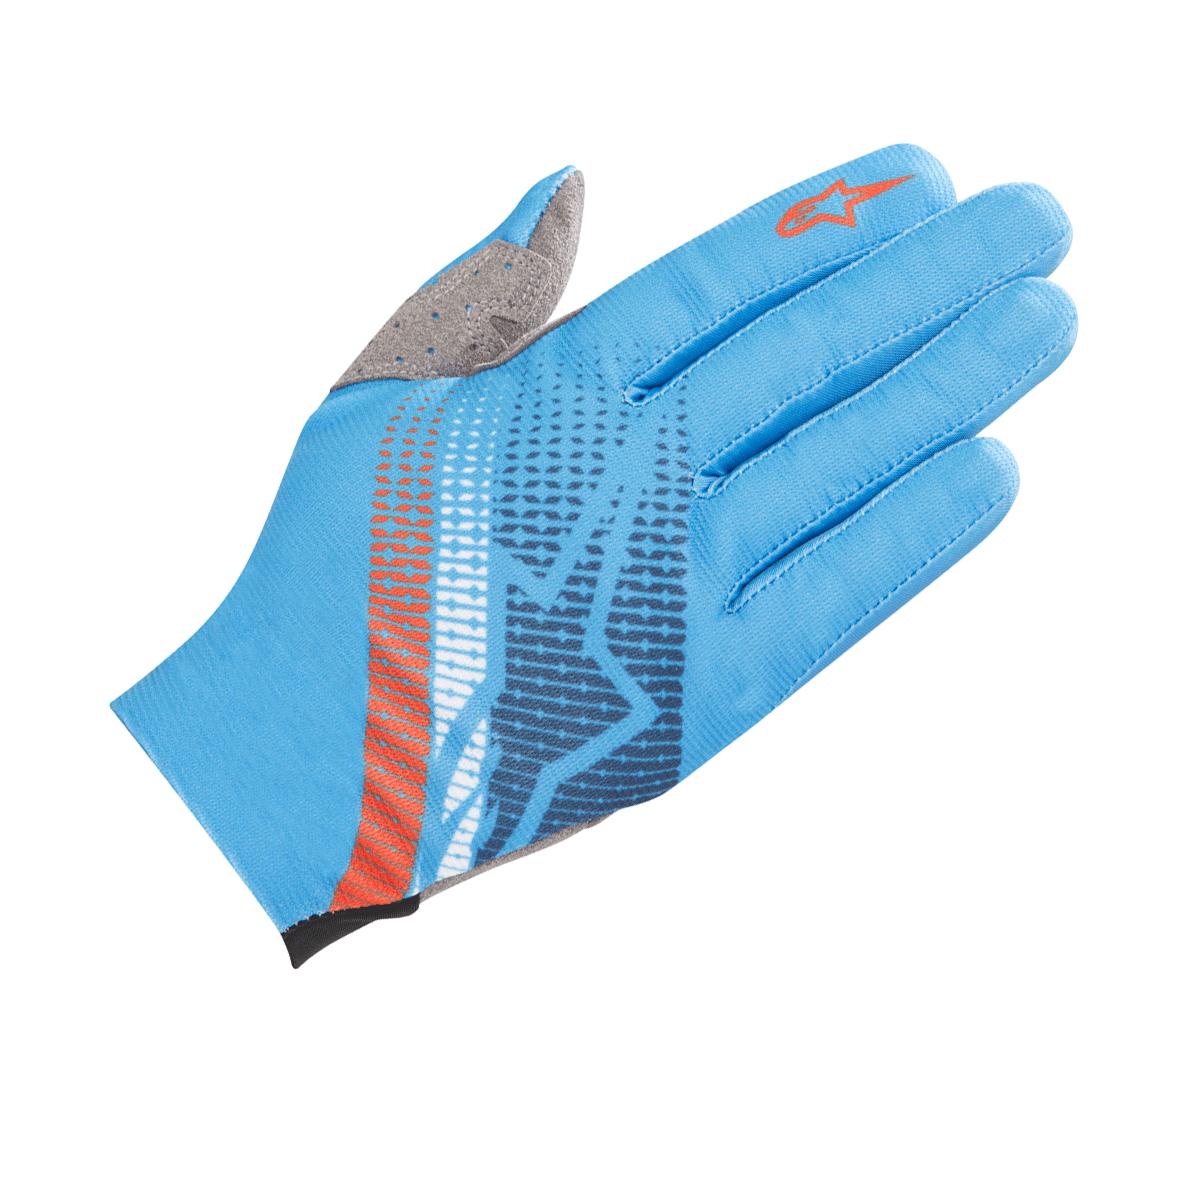 ALPINESTARS Predator Glove 2018 Bright Blue/Poseidon/Orange S